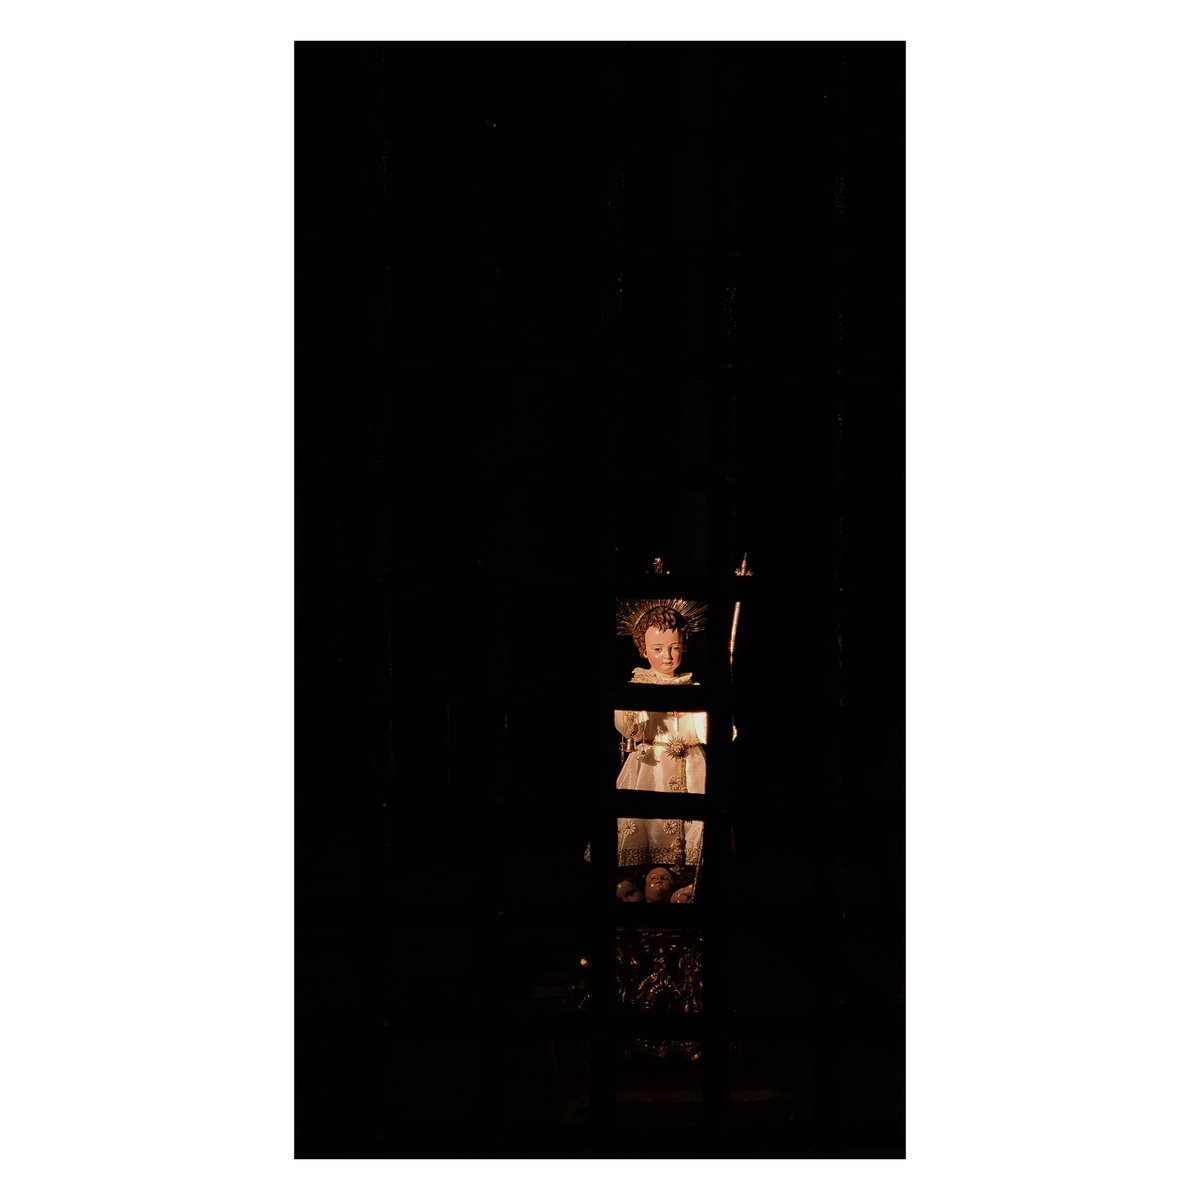 [ EL MILAGRITO ]
.
.
.
>Niño Jesús Milagroso. Convento del Espíritu Santo. Juan de Mesa. Siglo XVII. Sevilla 
.
.
.
#juandemesa #convento #sevilla #espiritusanto #sevillabarroca #sevillaoculta #niñojesus #art #barroco